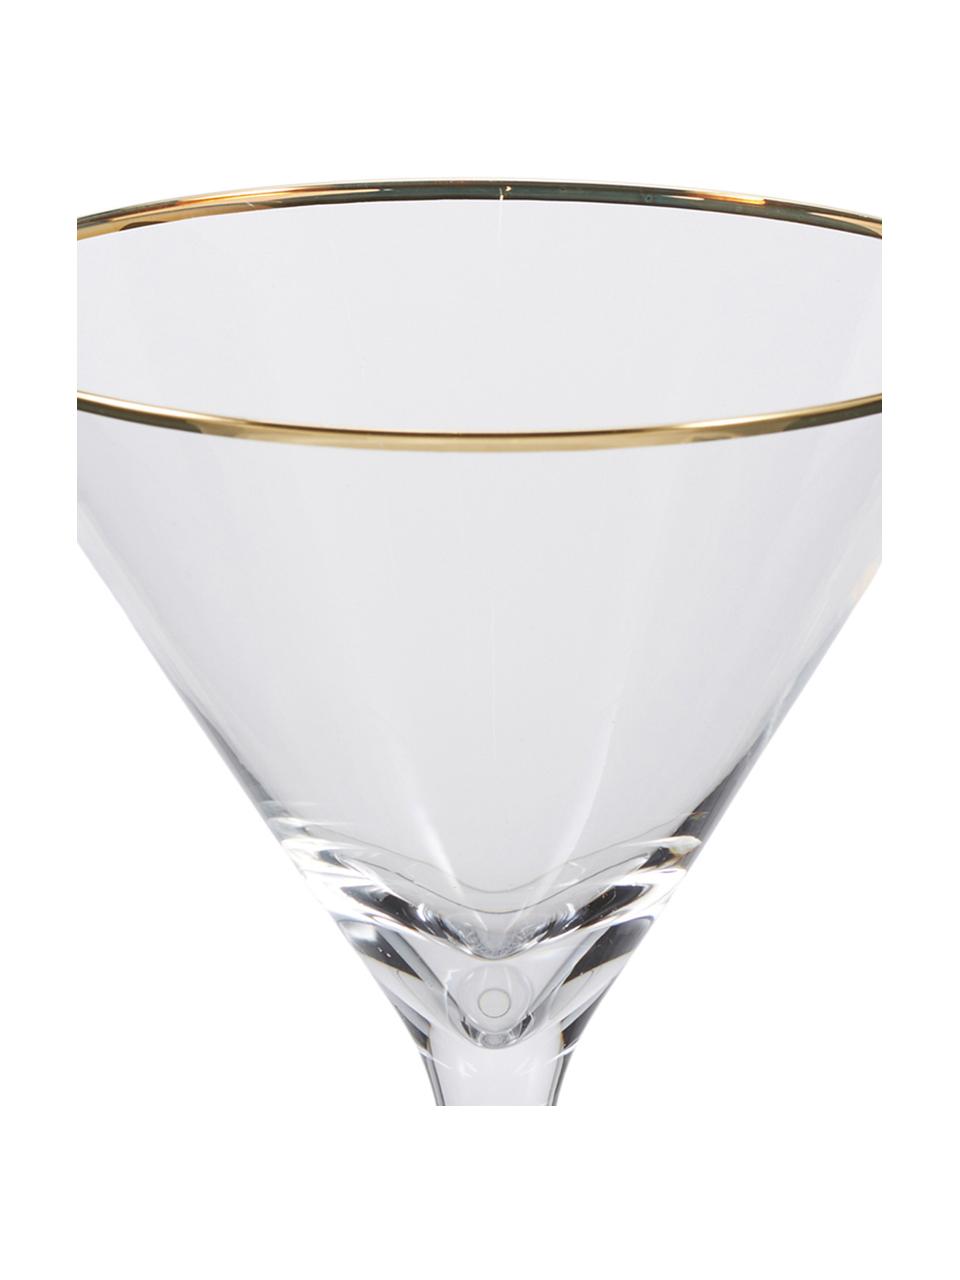 Martiniglazen Chloe, 4 stuks, Glas, Transparant met goudkleurige rand, Ø 12 x H 19 cm